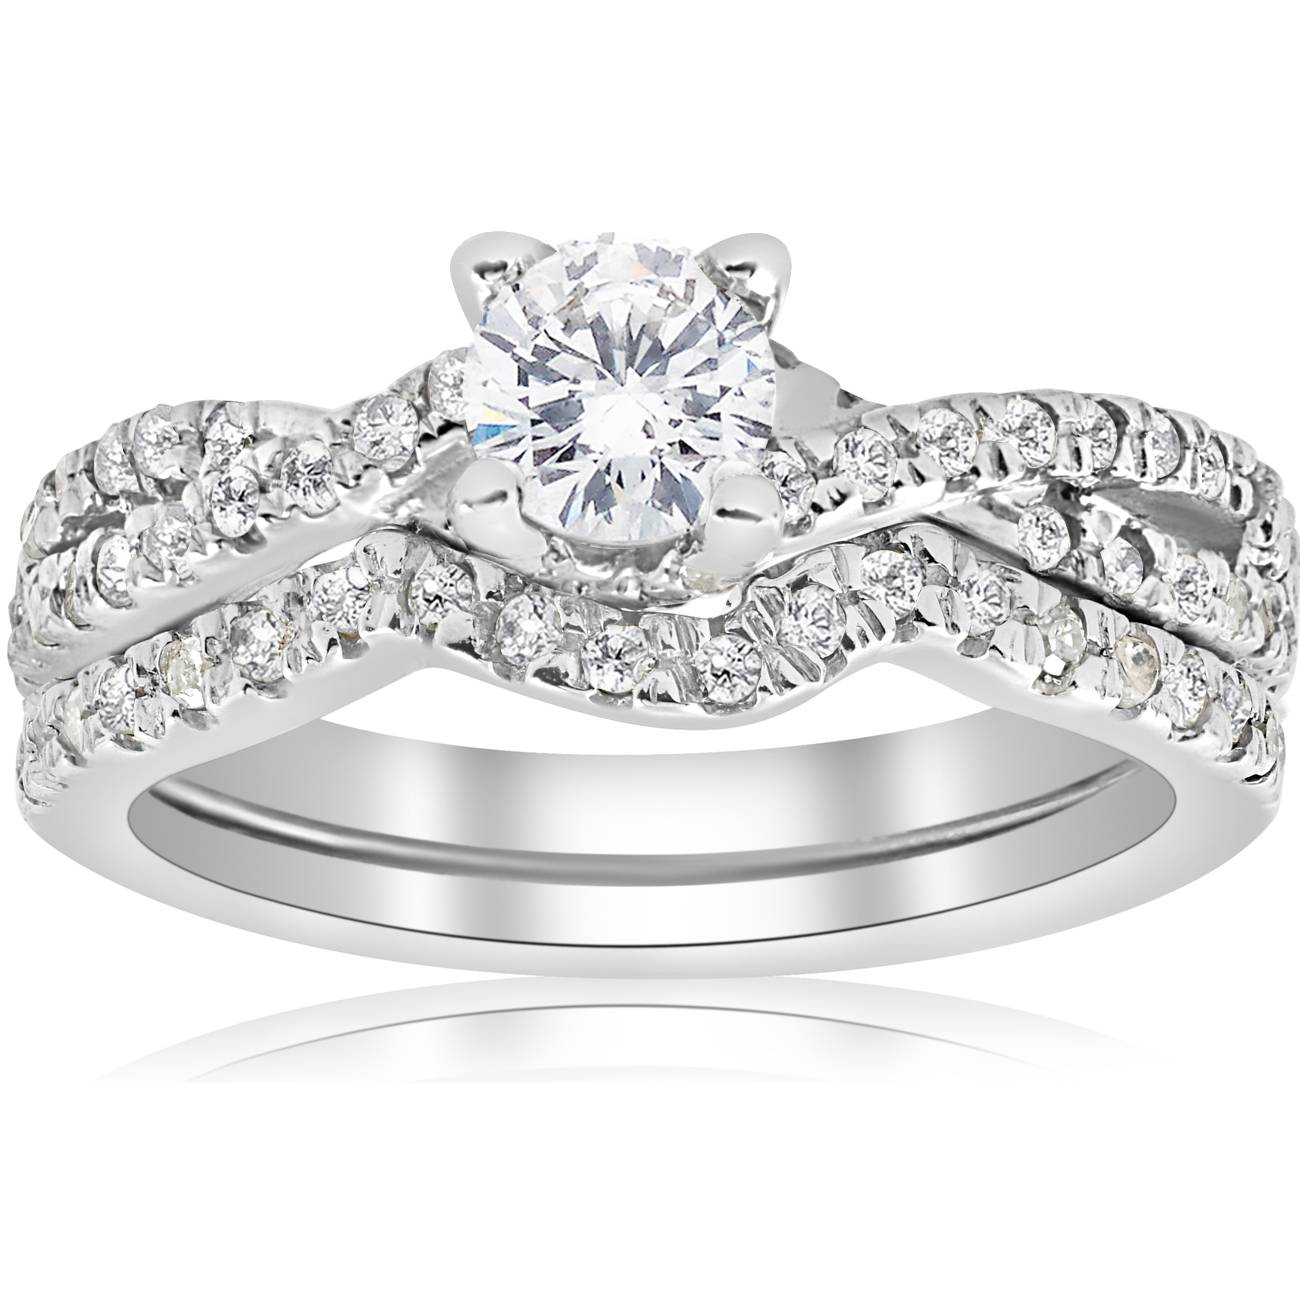 Pompeii3 1ct Infinity Diamond Engagement Wedding Ring Set 14K White Gold Round Solitaire